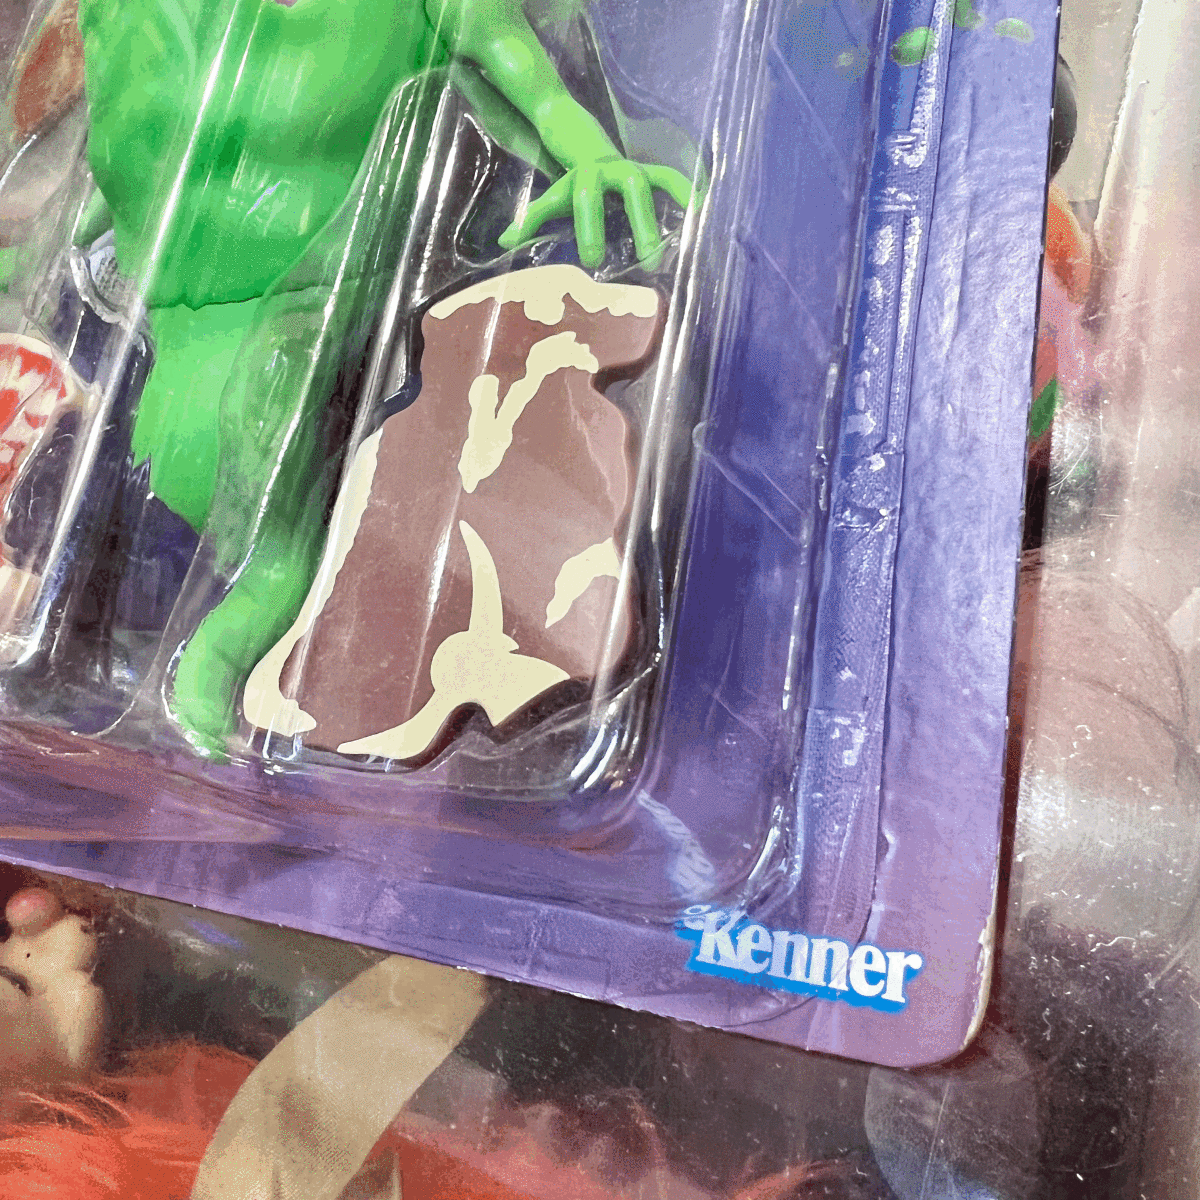  призрак Buster z зеленый призрак Sly ma- фигурка The Real Ghostbusters The Green Ghost Slimer Retro Kenner Hasbro